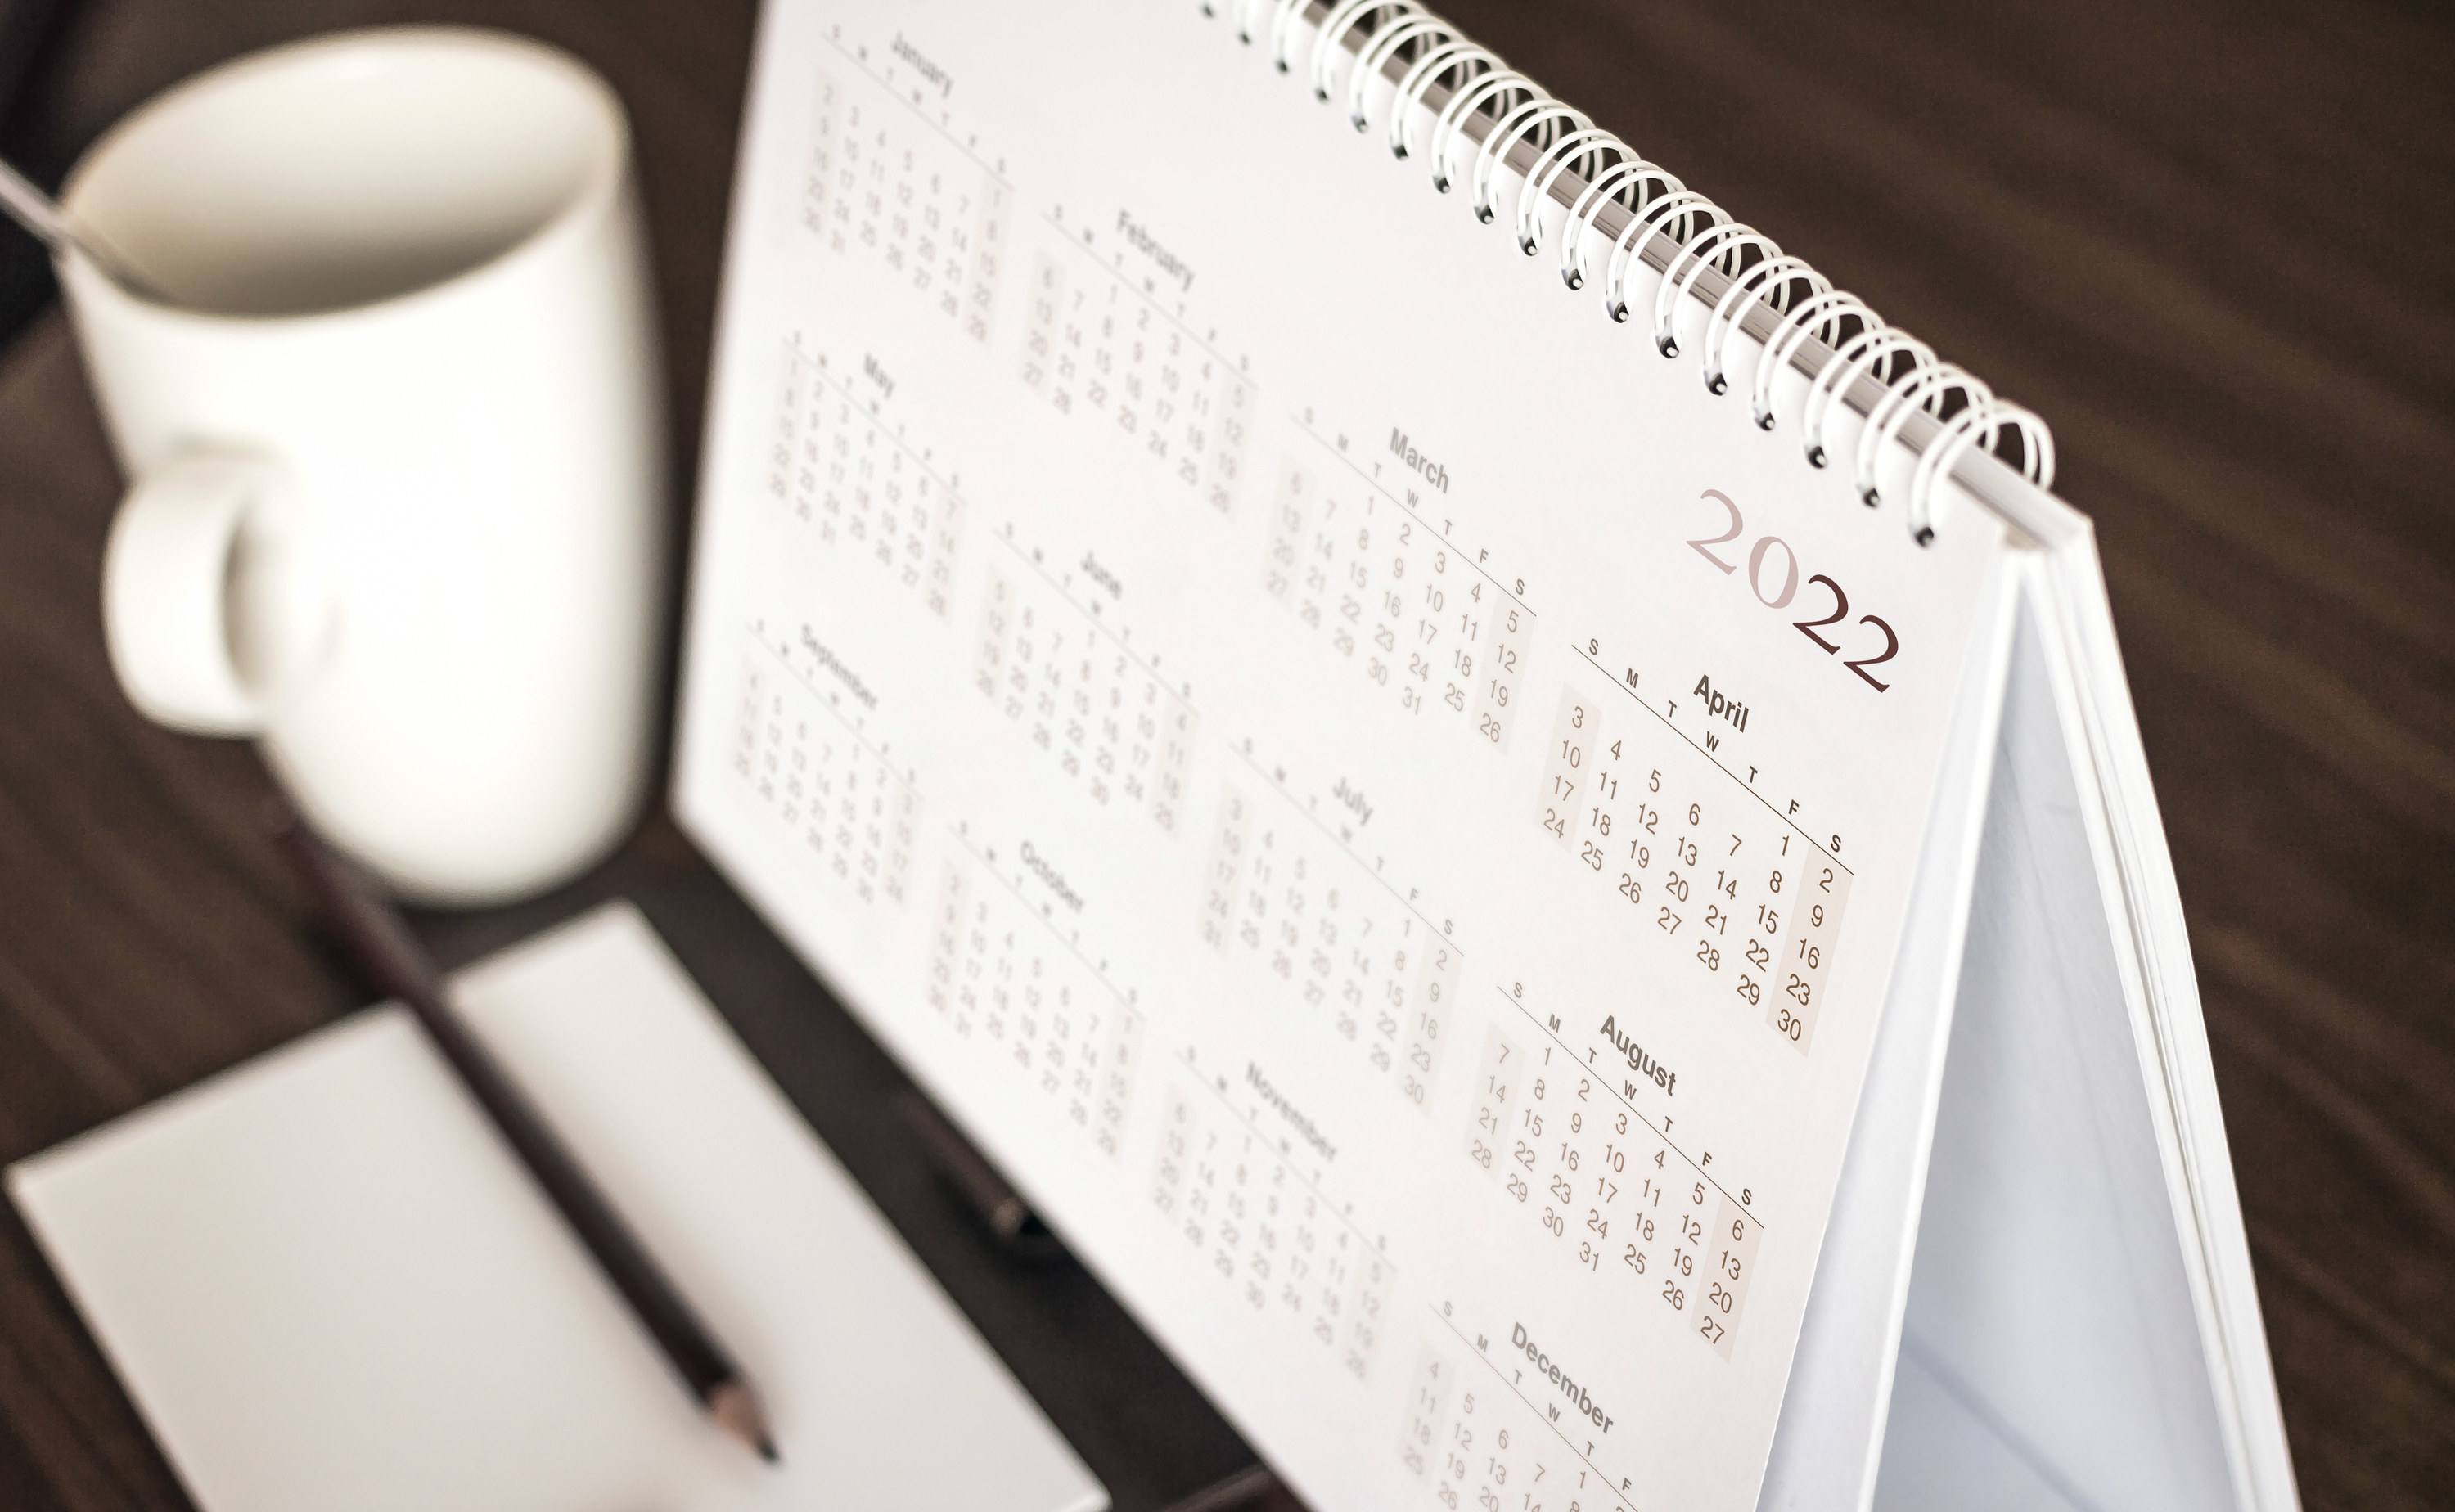 A notebook sized calendar propped up on a desk next to a mug